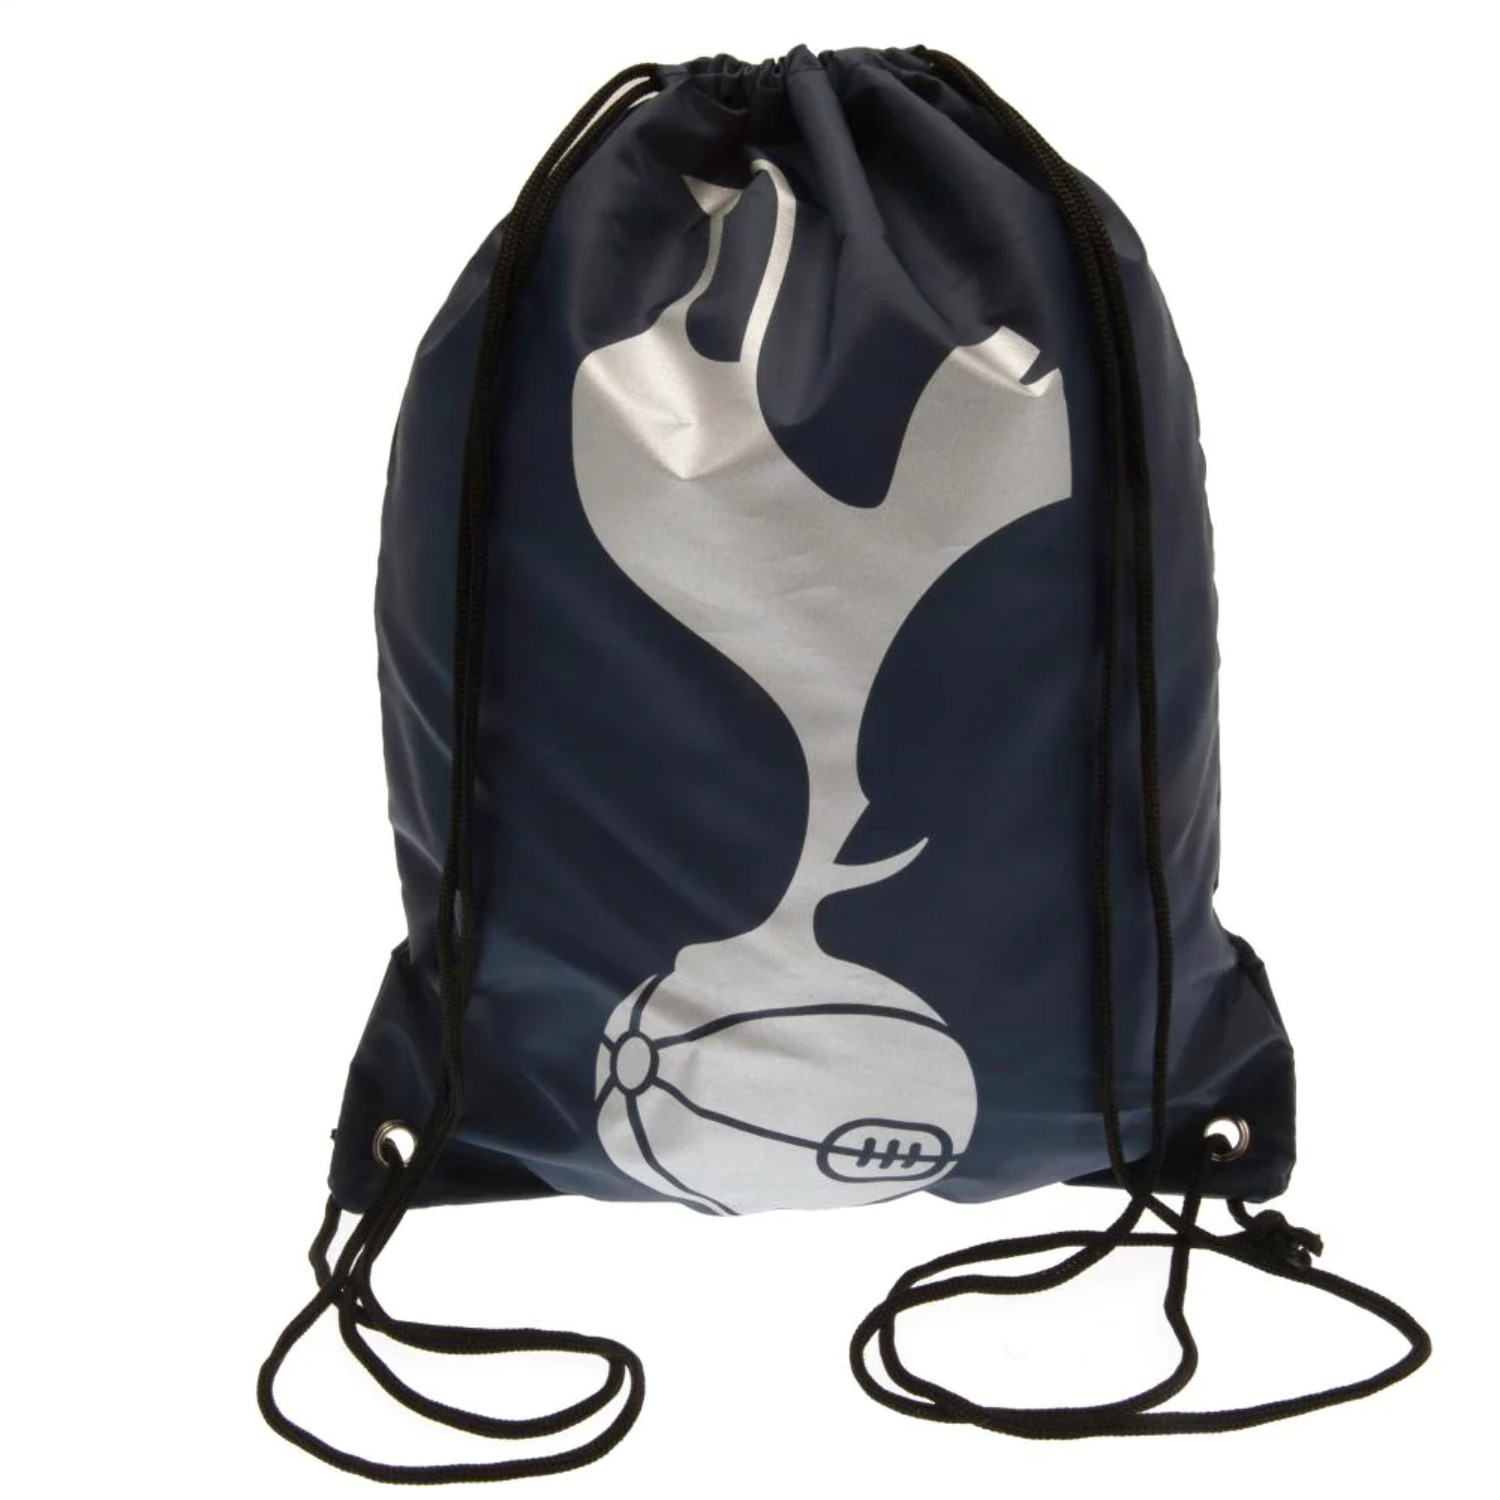 Tottenham Hotspur FC Crest Gym Bag - image 1 of 2